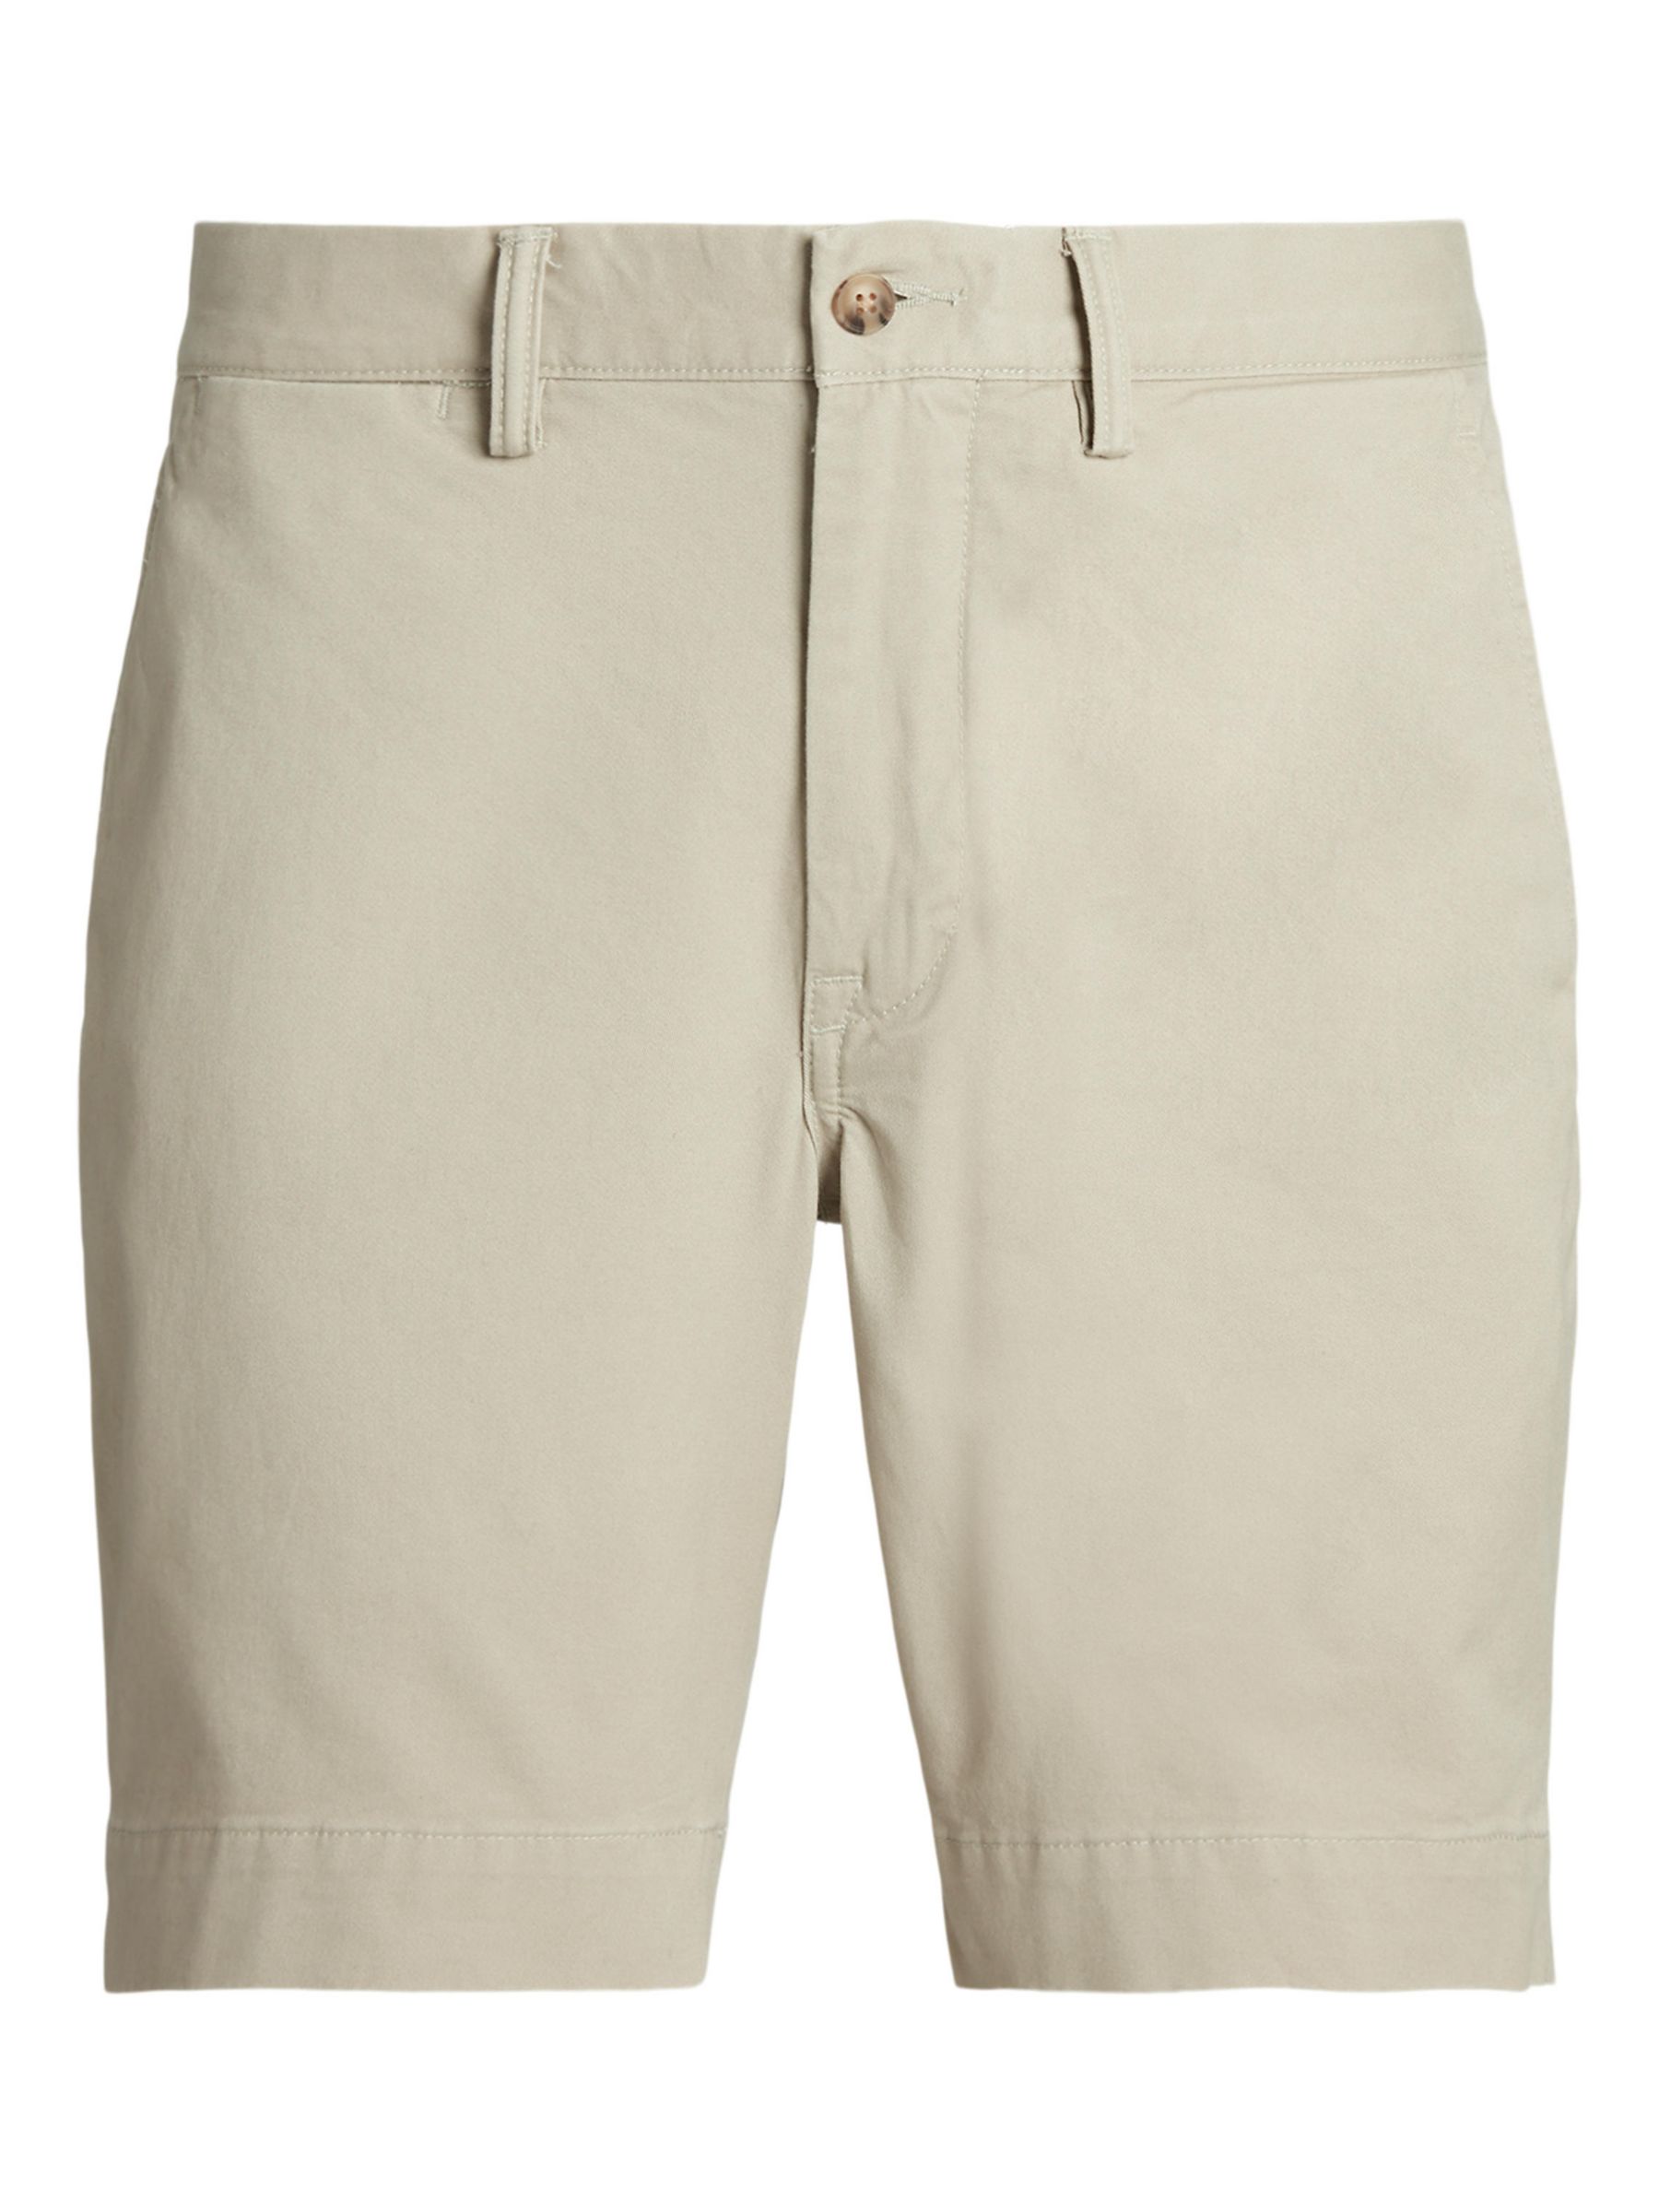 Ralph Lauren Extra Stretch Chino Shorts, Khaki, 30R